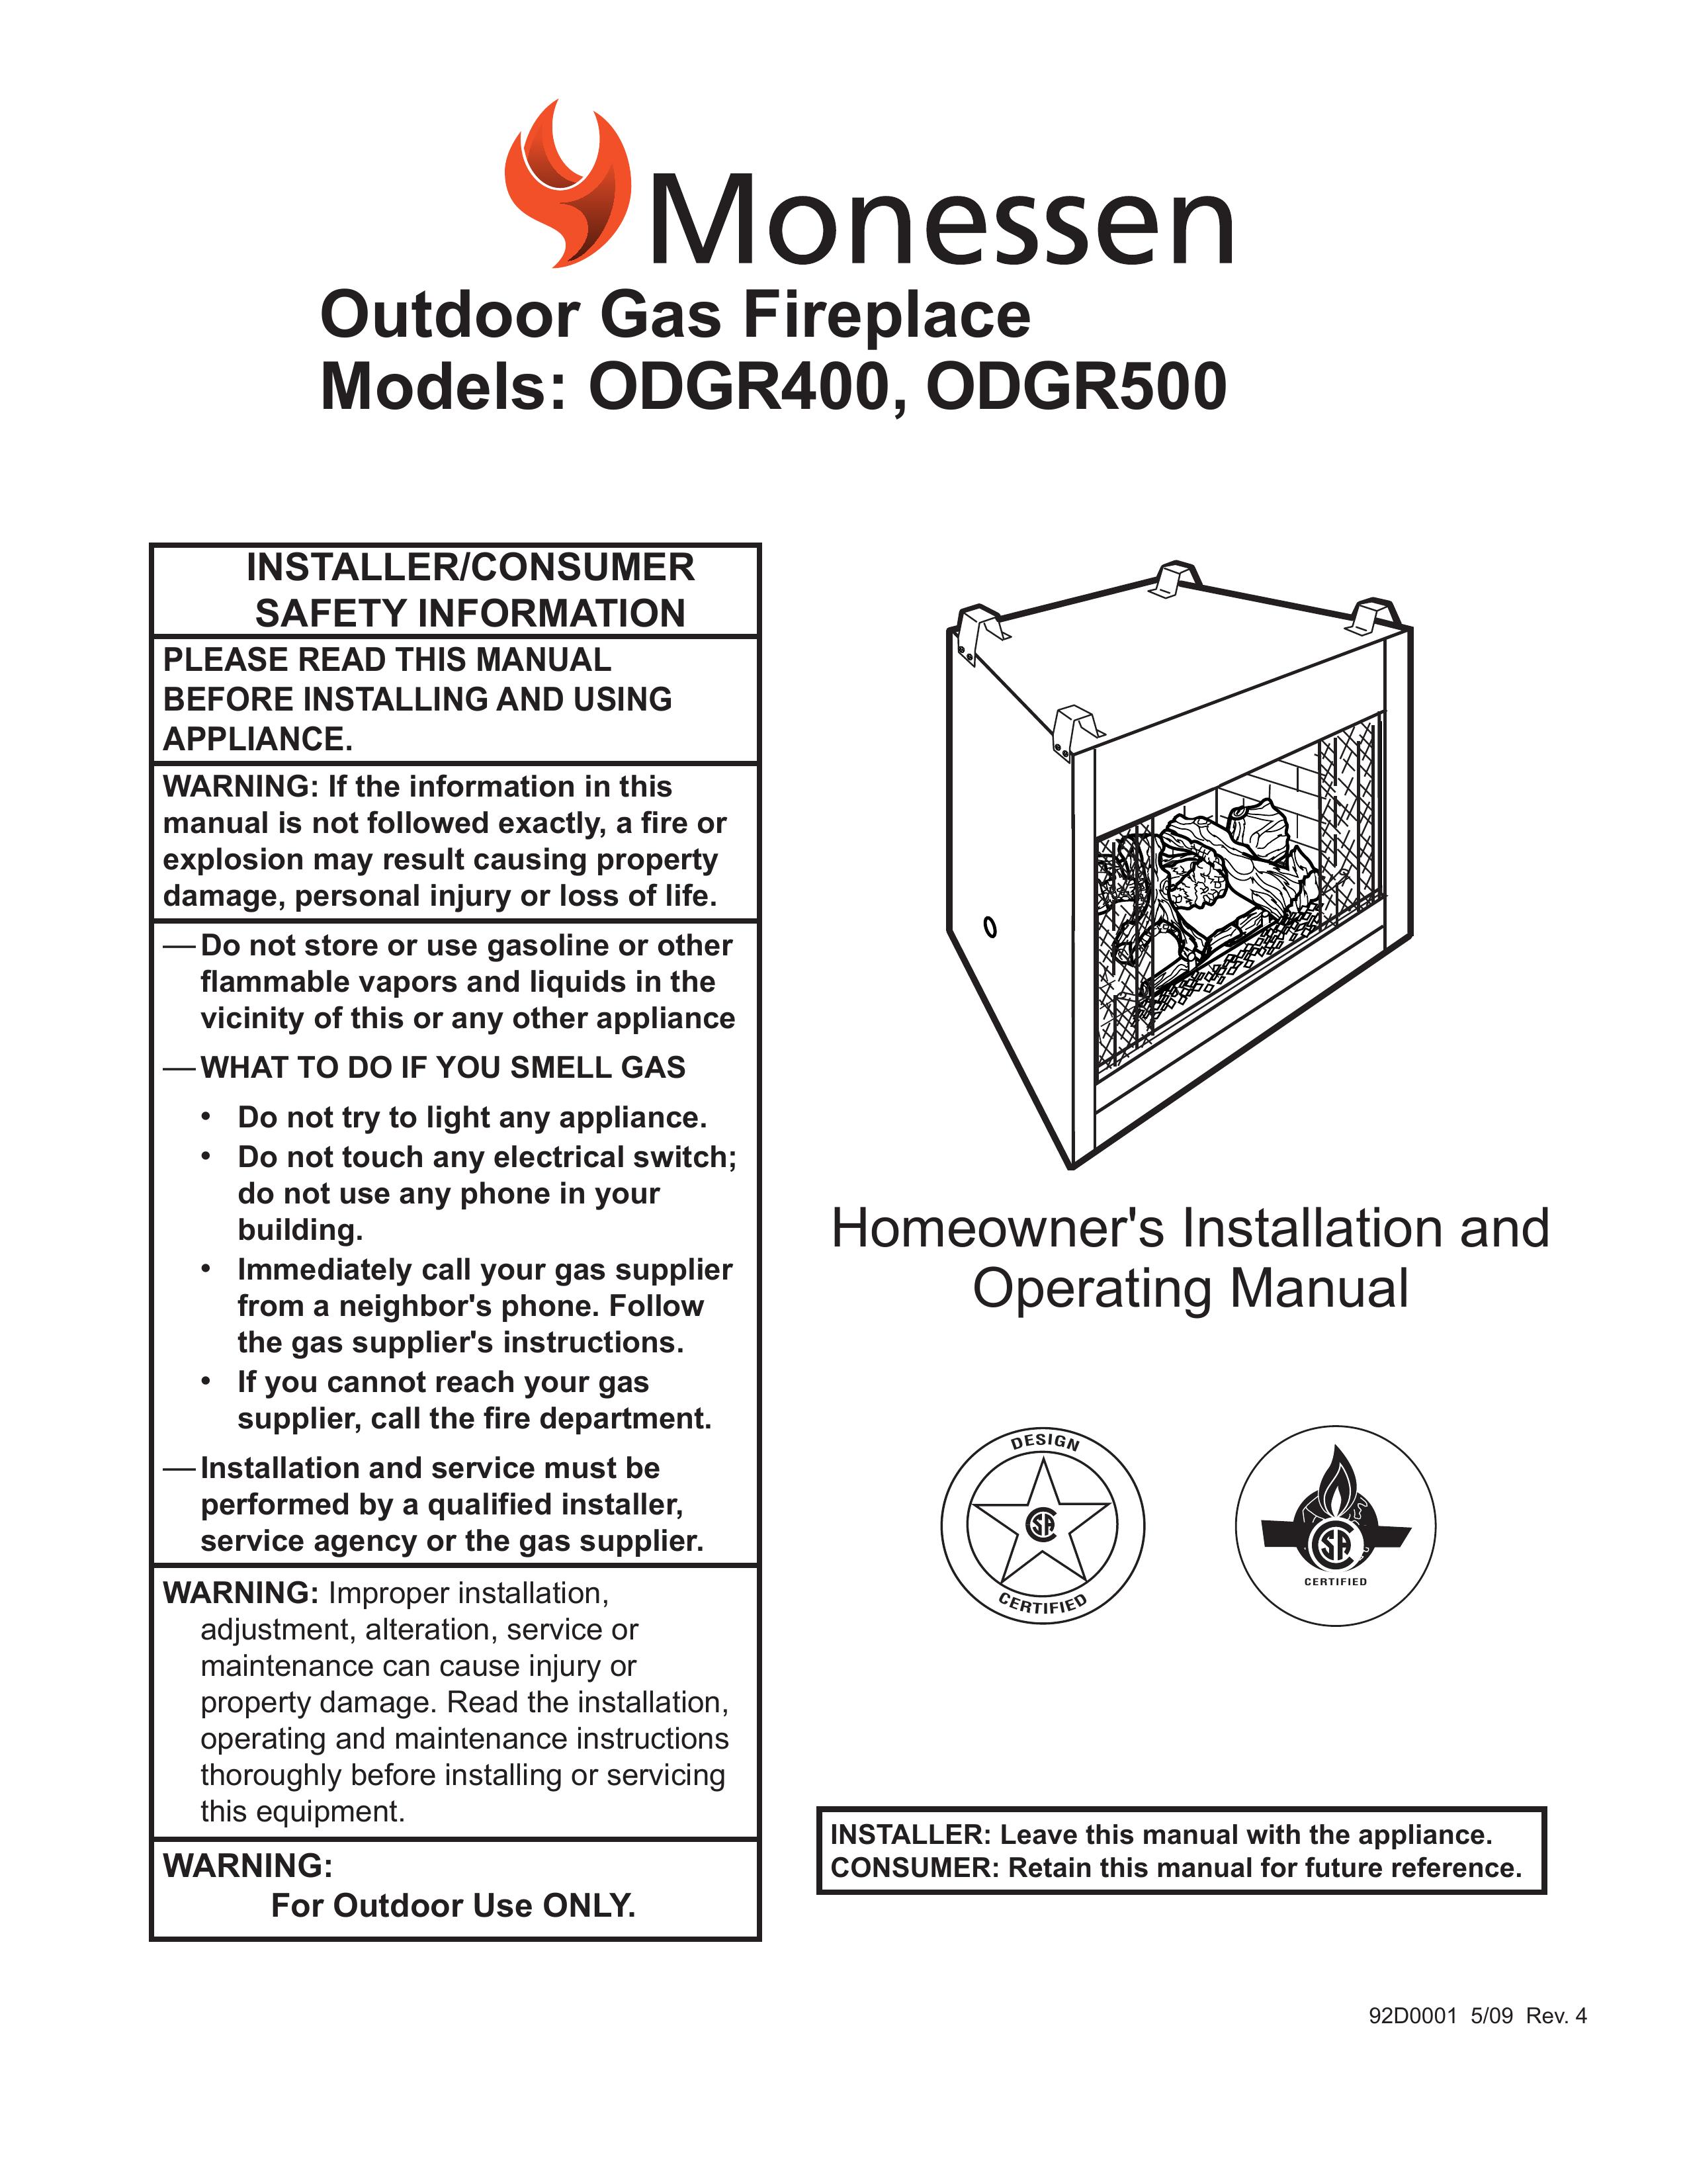 Monessen Hearth ODGR500 Fire Pit User Manual